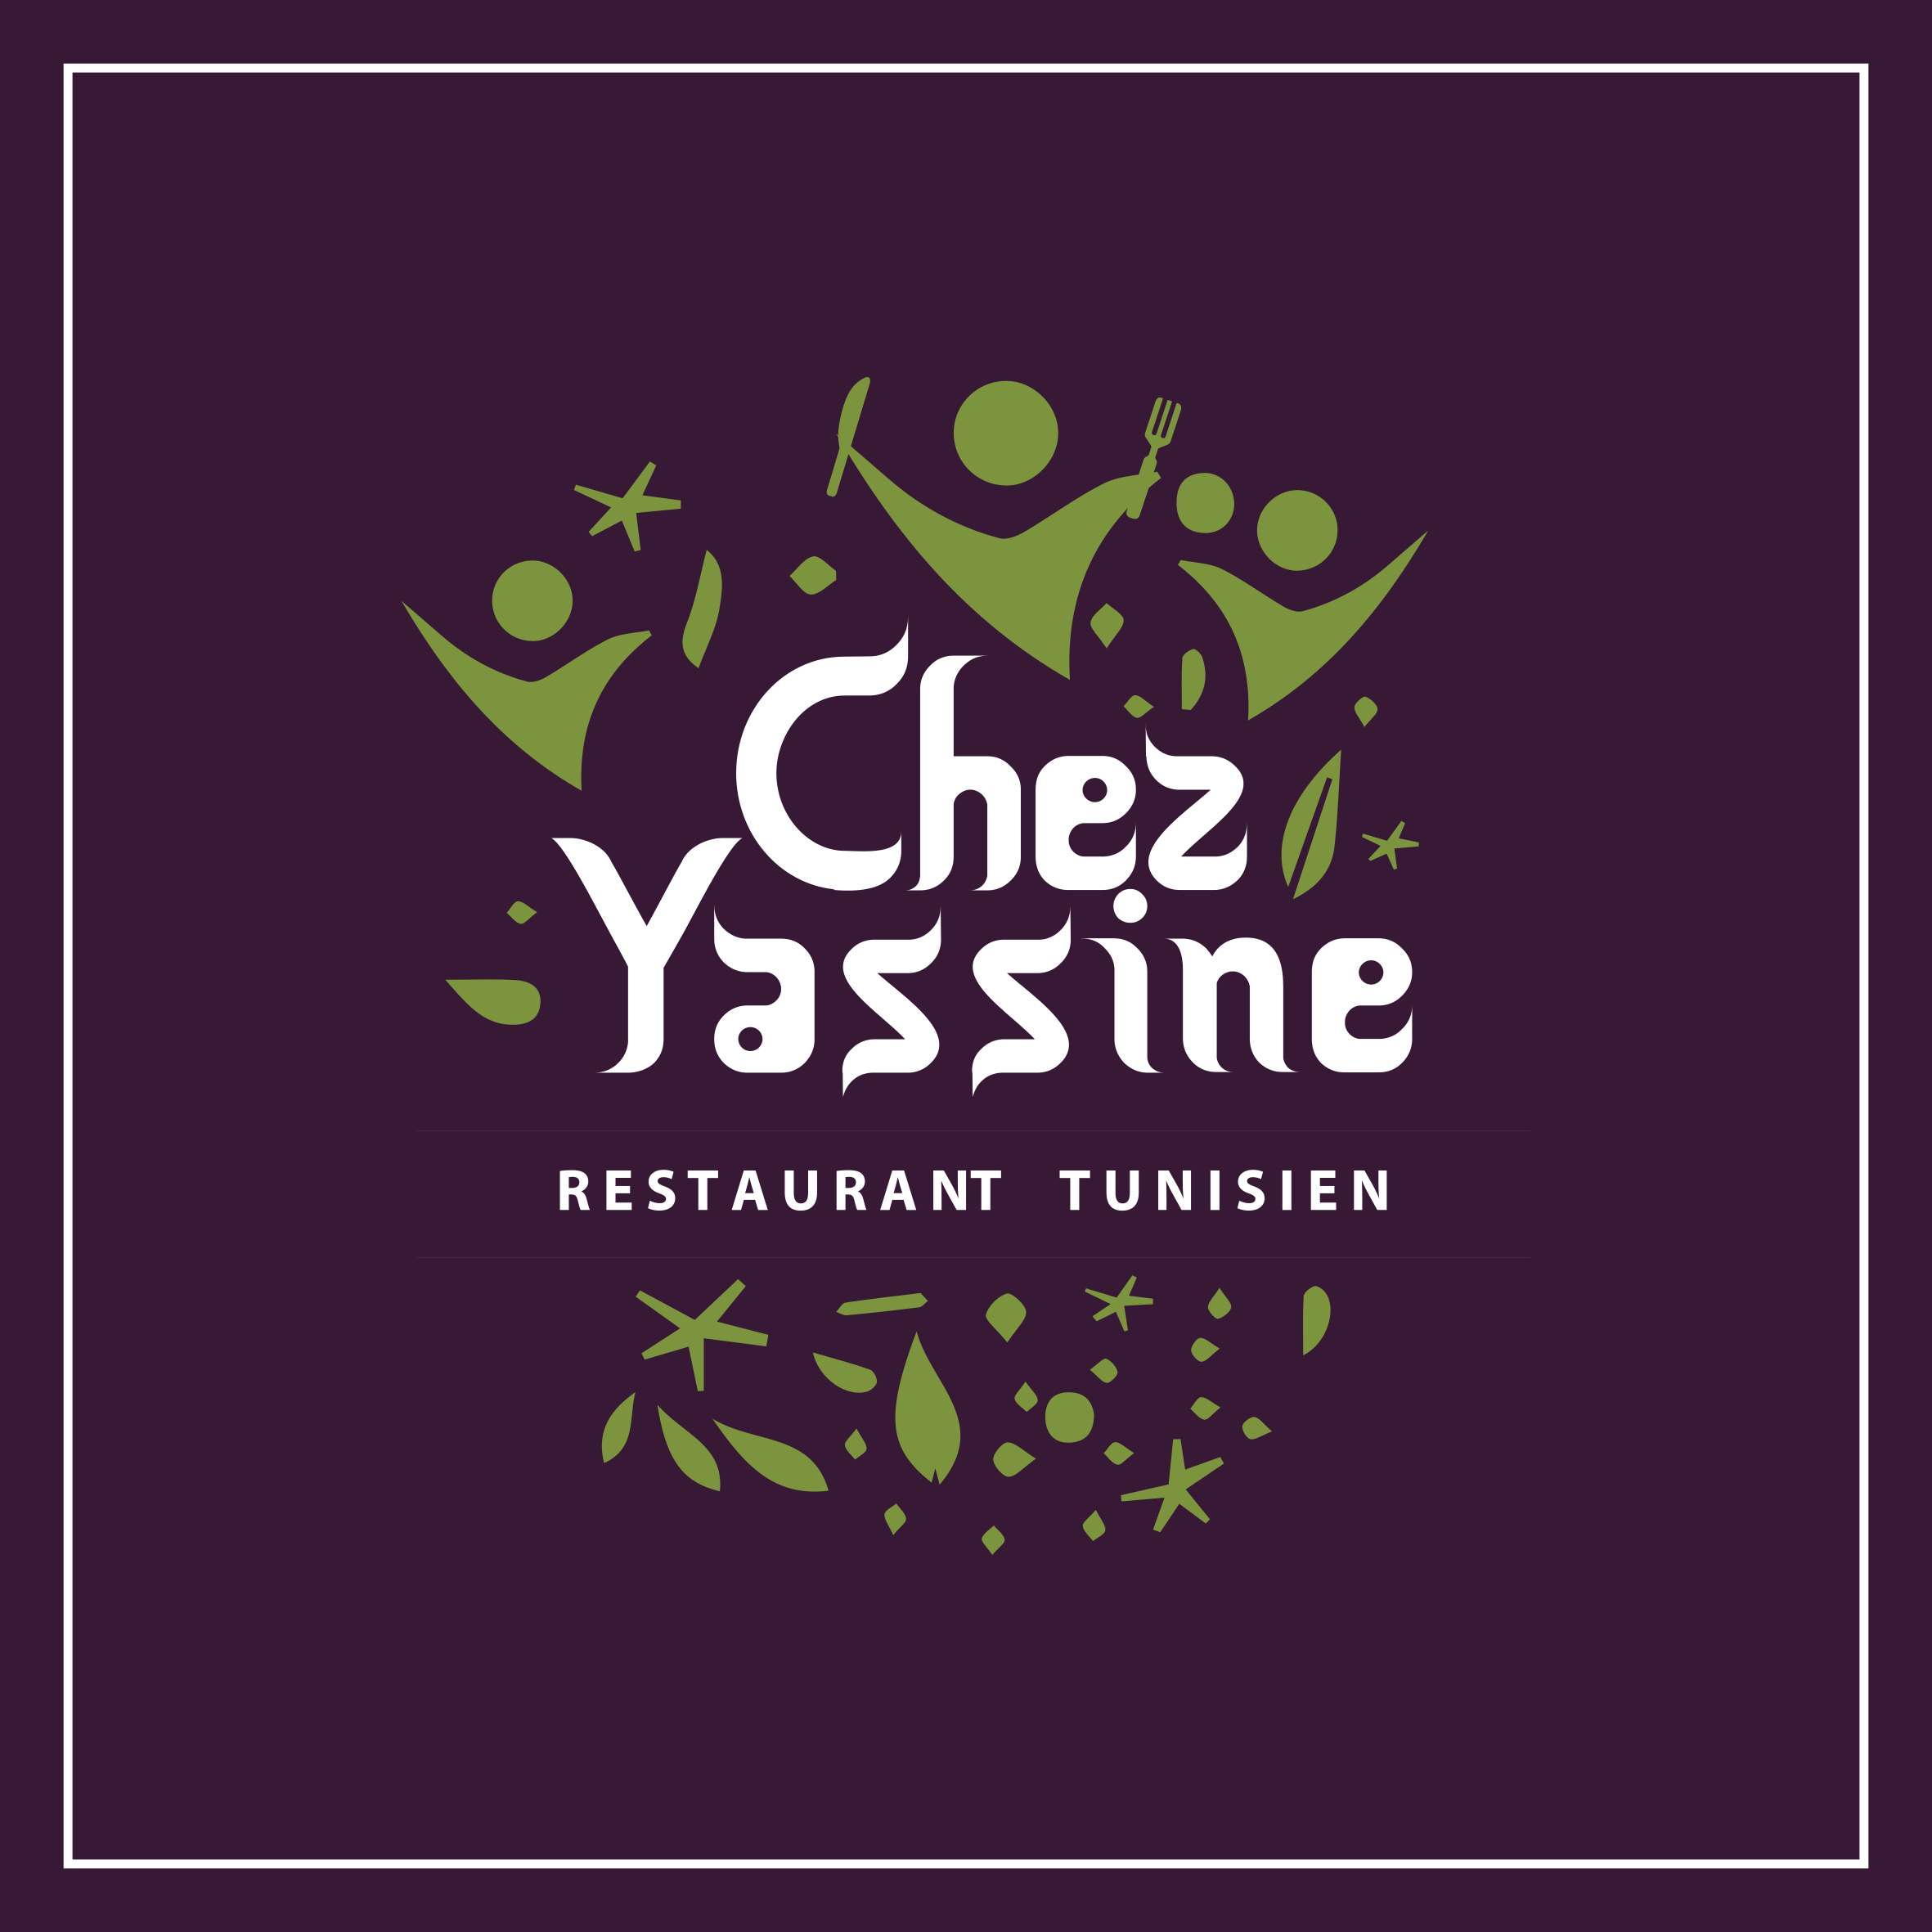 Chez Yassine